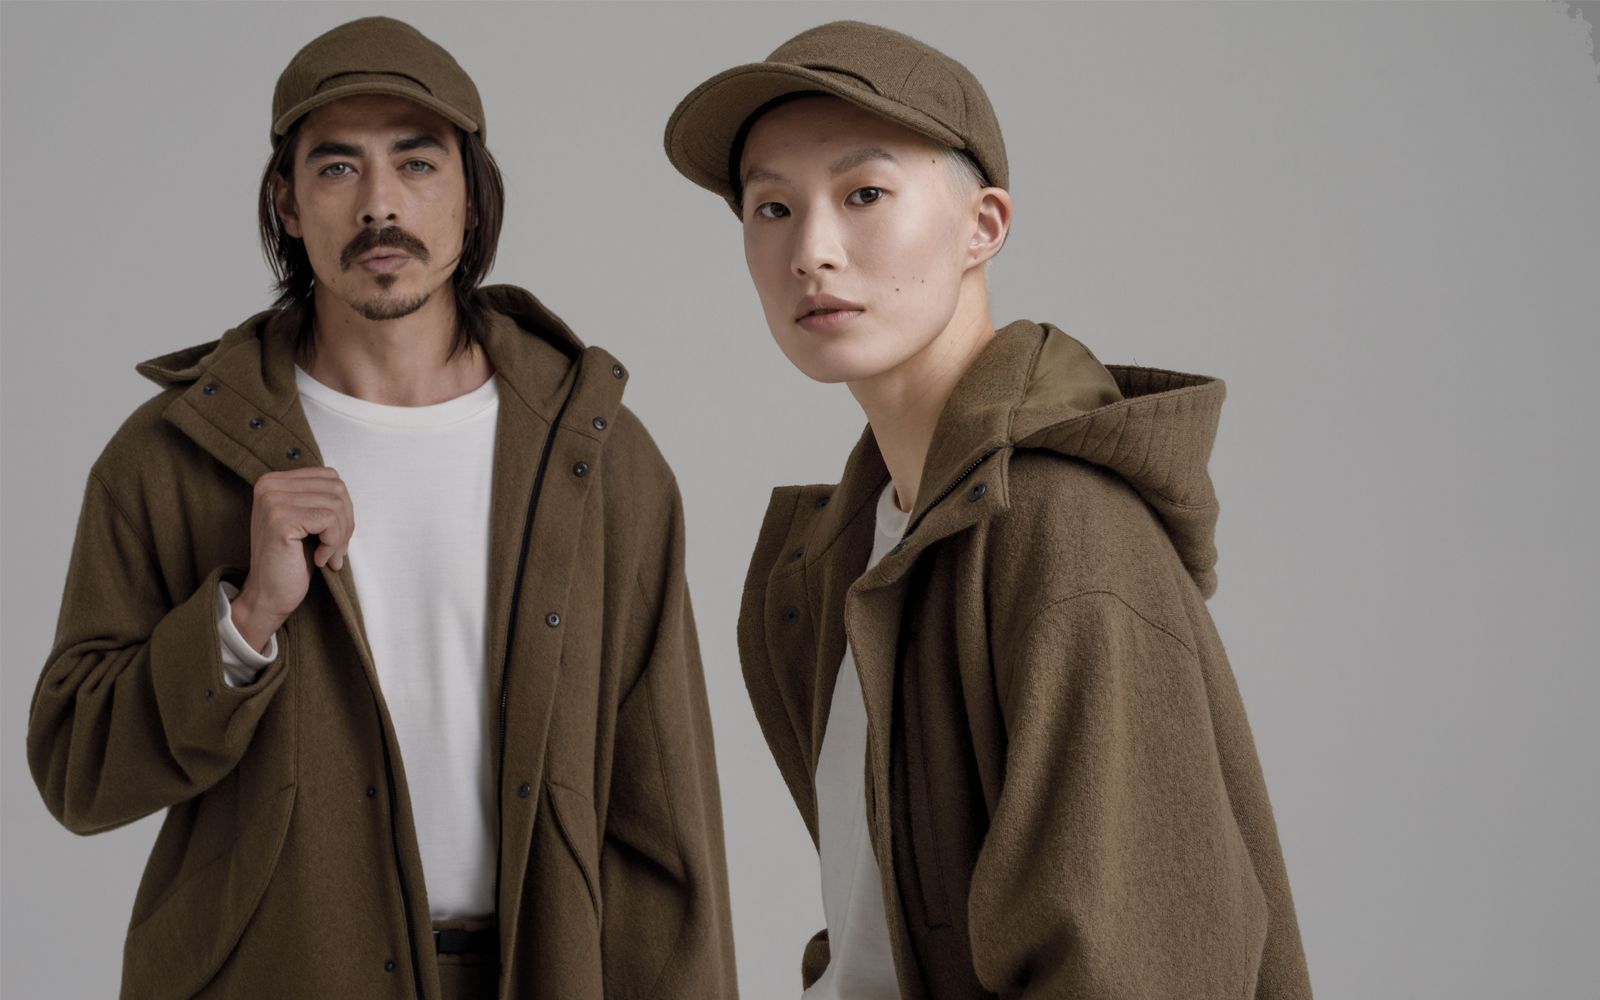 Japanese design meets merino wool in Goldwin x Icebreaker collabo